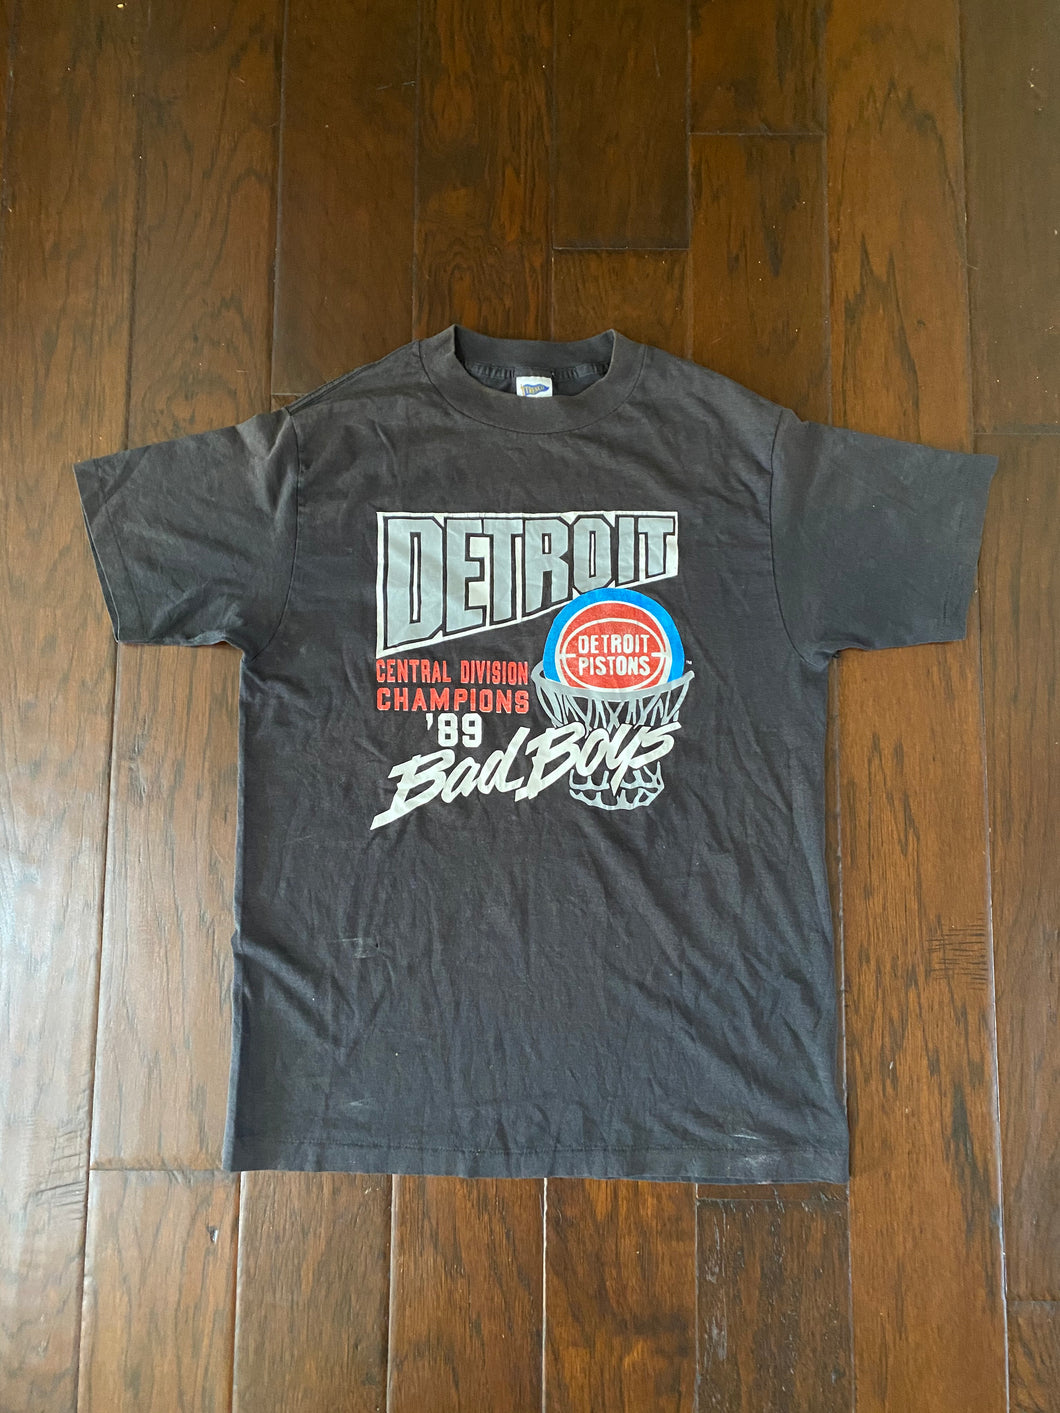 Detroit Pistons 1989 “Bad Boys” Vintage Distressed T-shirt